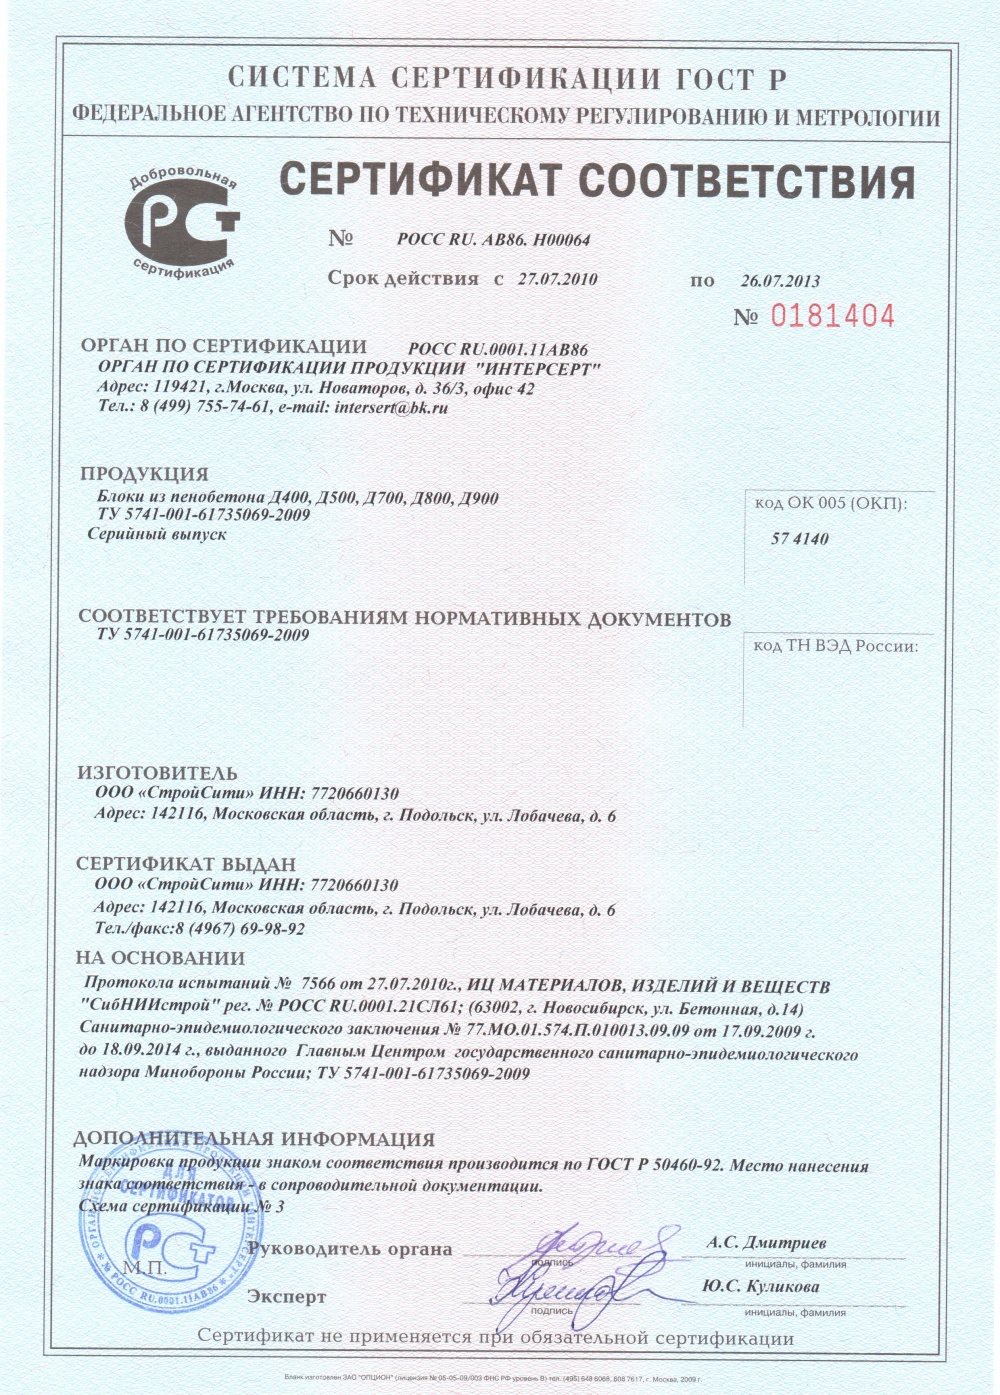 Сертификат соответствия на ПЕНОБЛОКИ